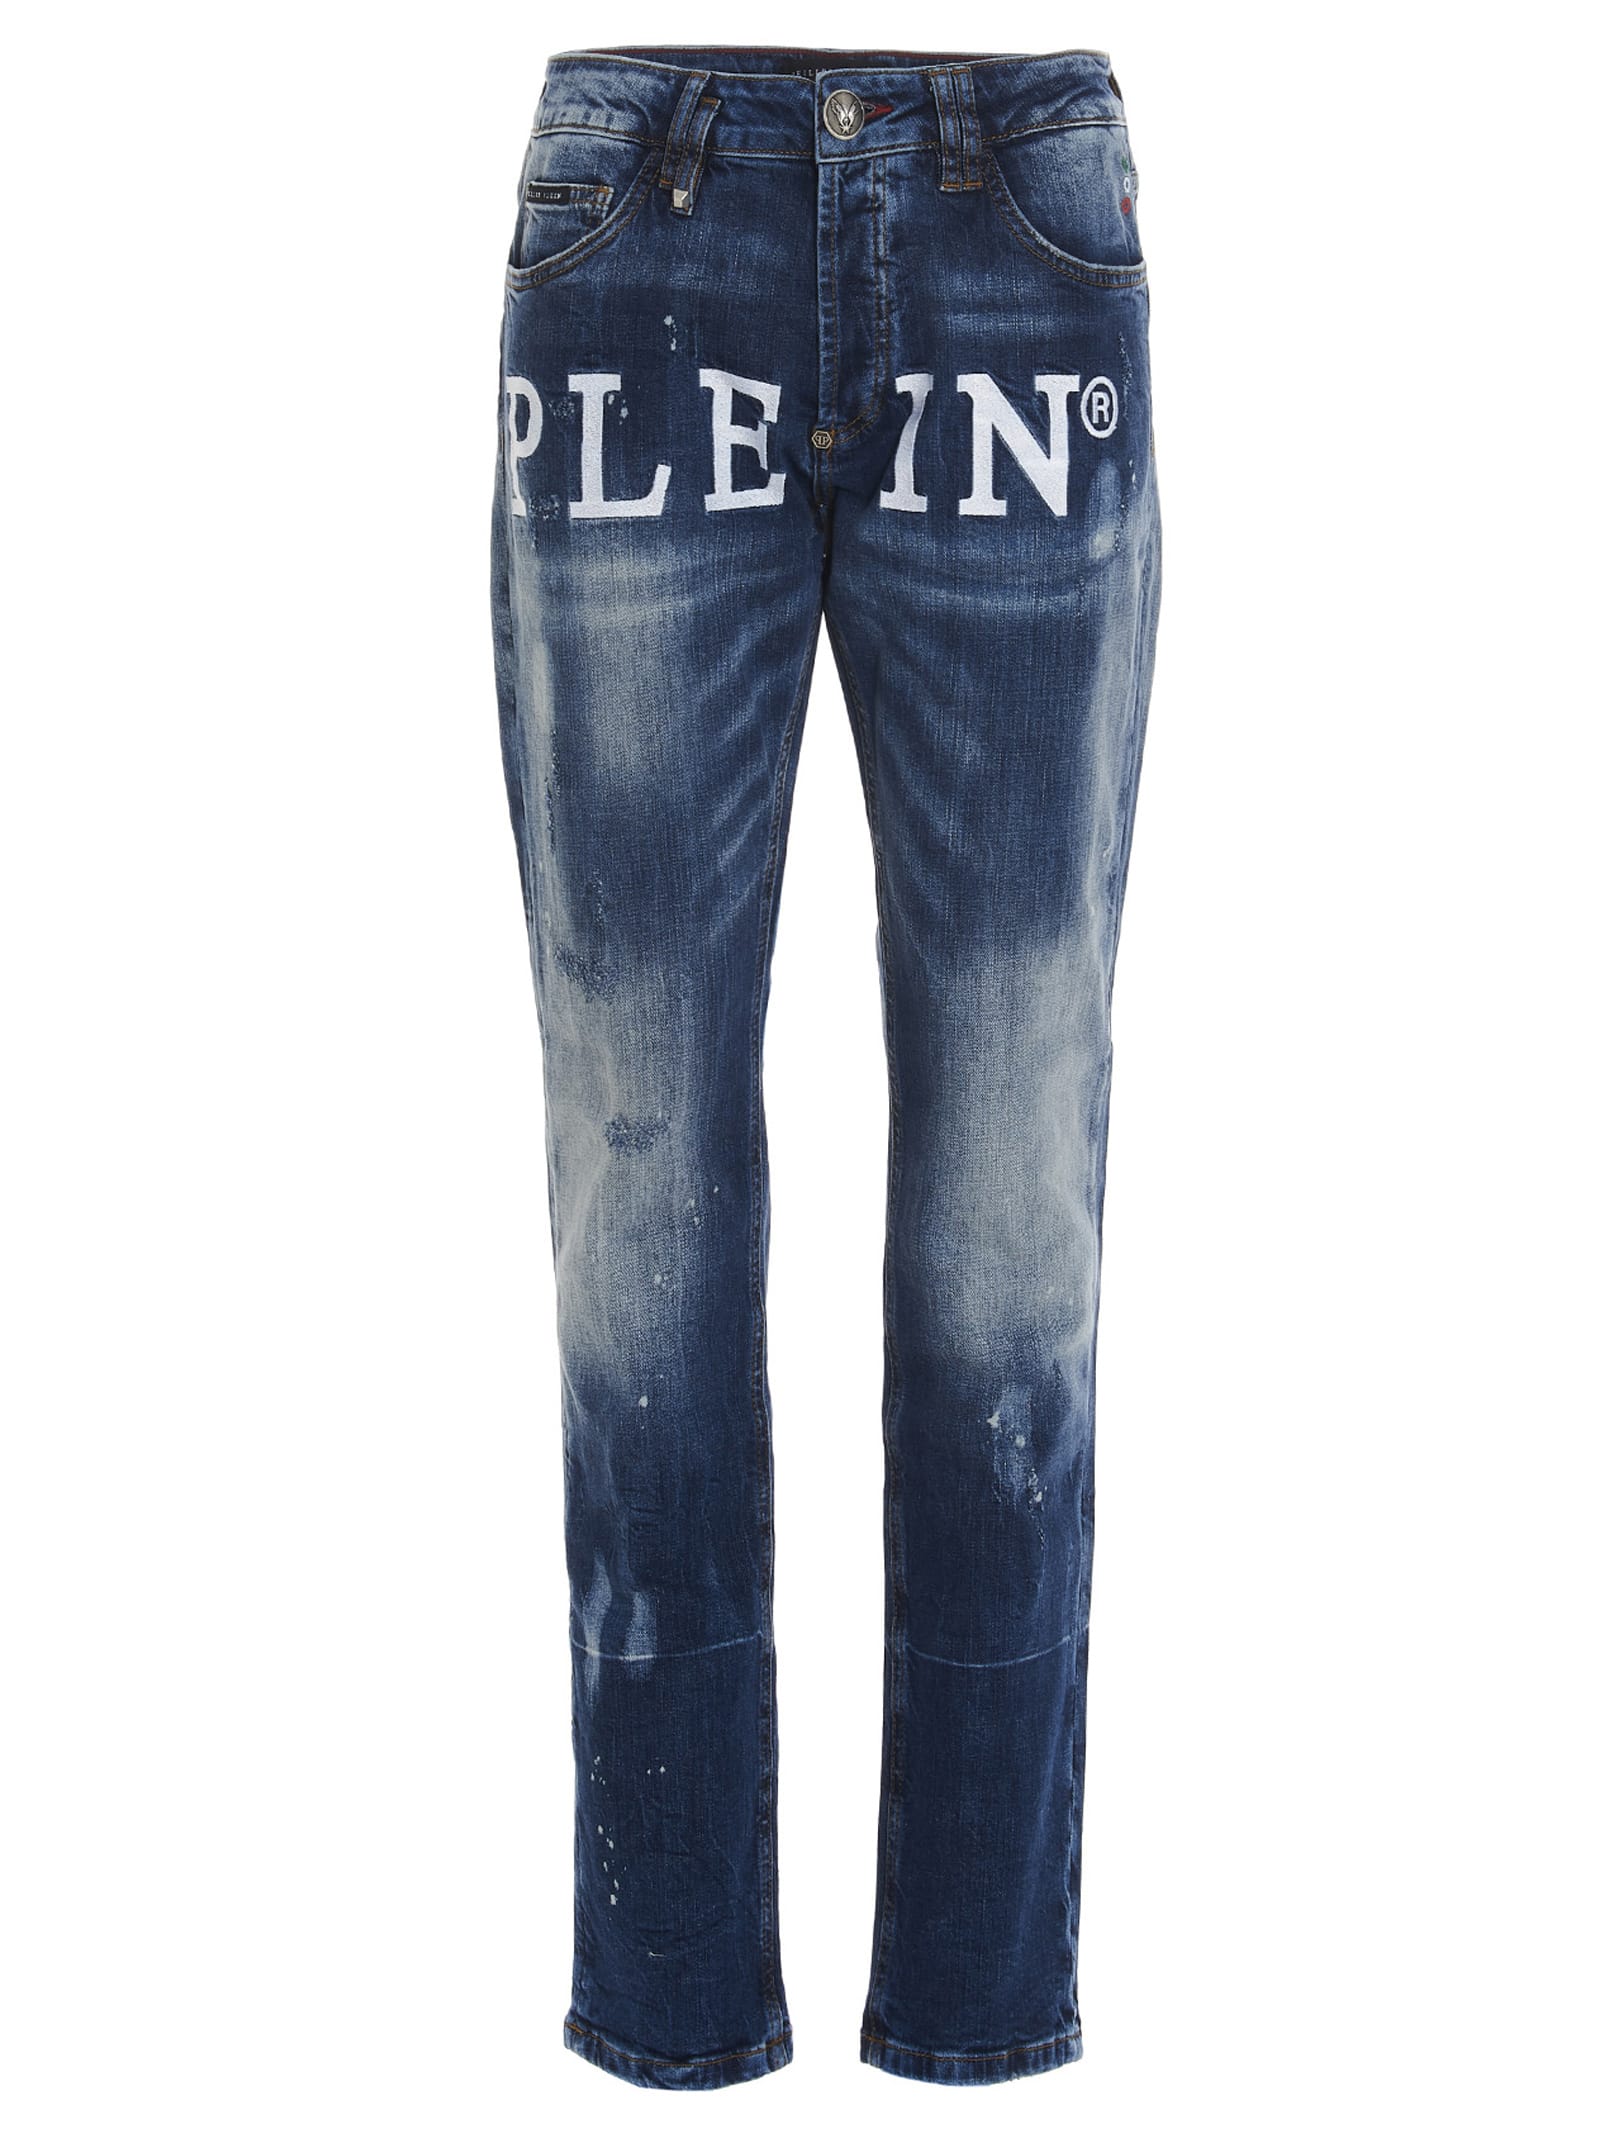 Philipp Plein iconic Plein Jeans